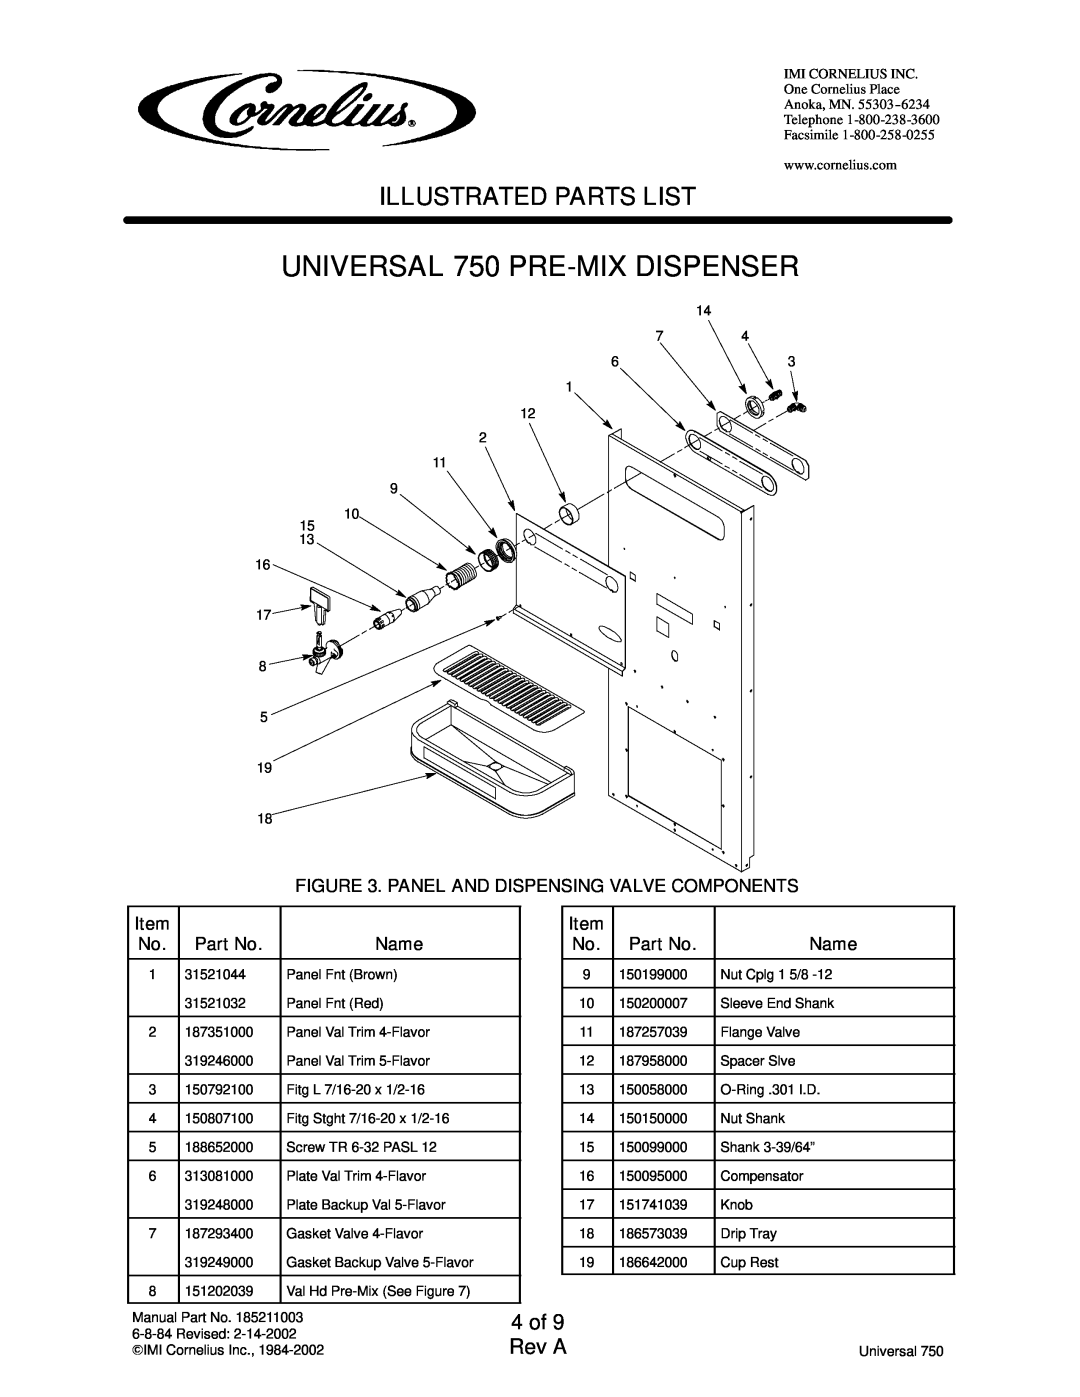 Cornelius 2849959xxx, 2849949xxx manual 4 of 9 Rev A, UNIVERSAL 750 PRE-MIXDISPENSER, Illustrated Parts List, Name 